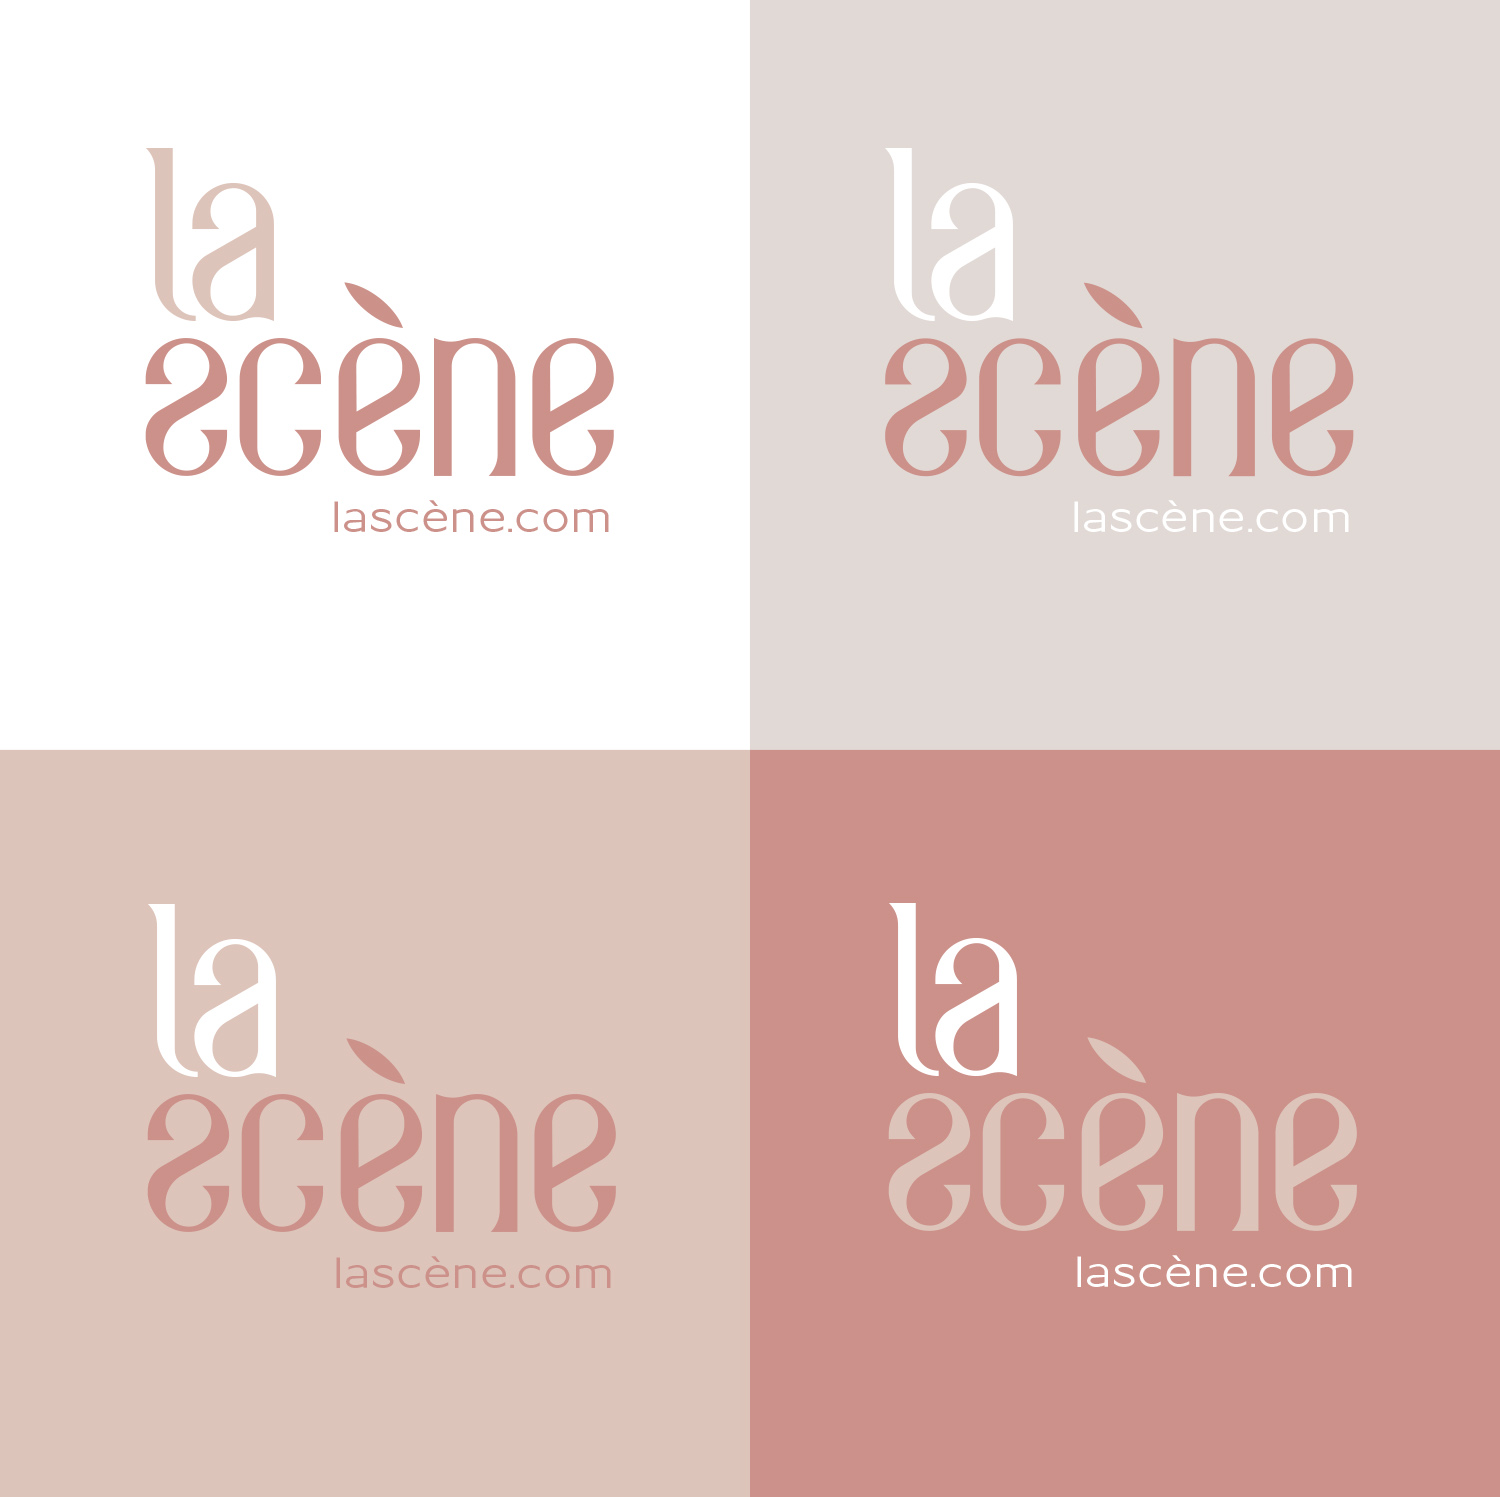 La Scene Logos.jpg